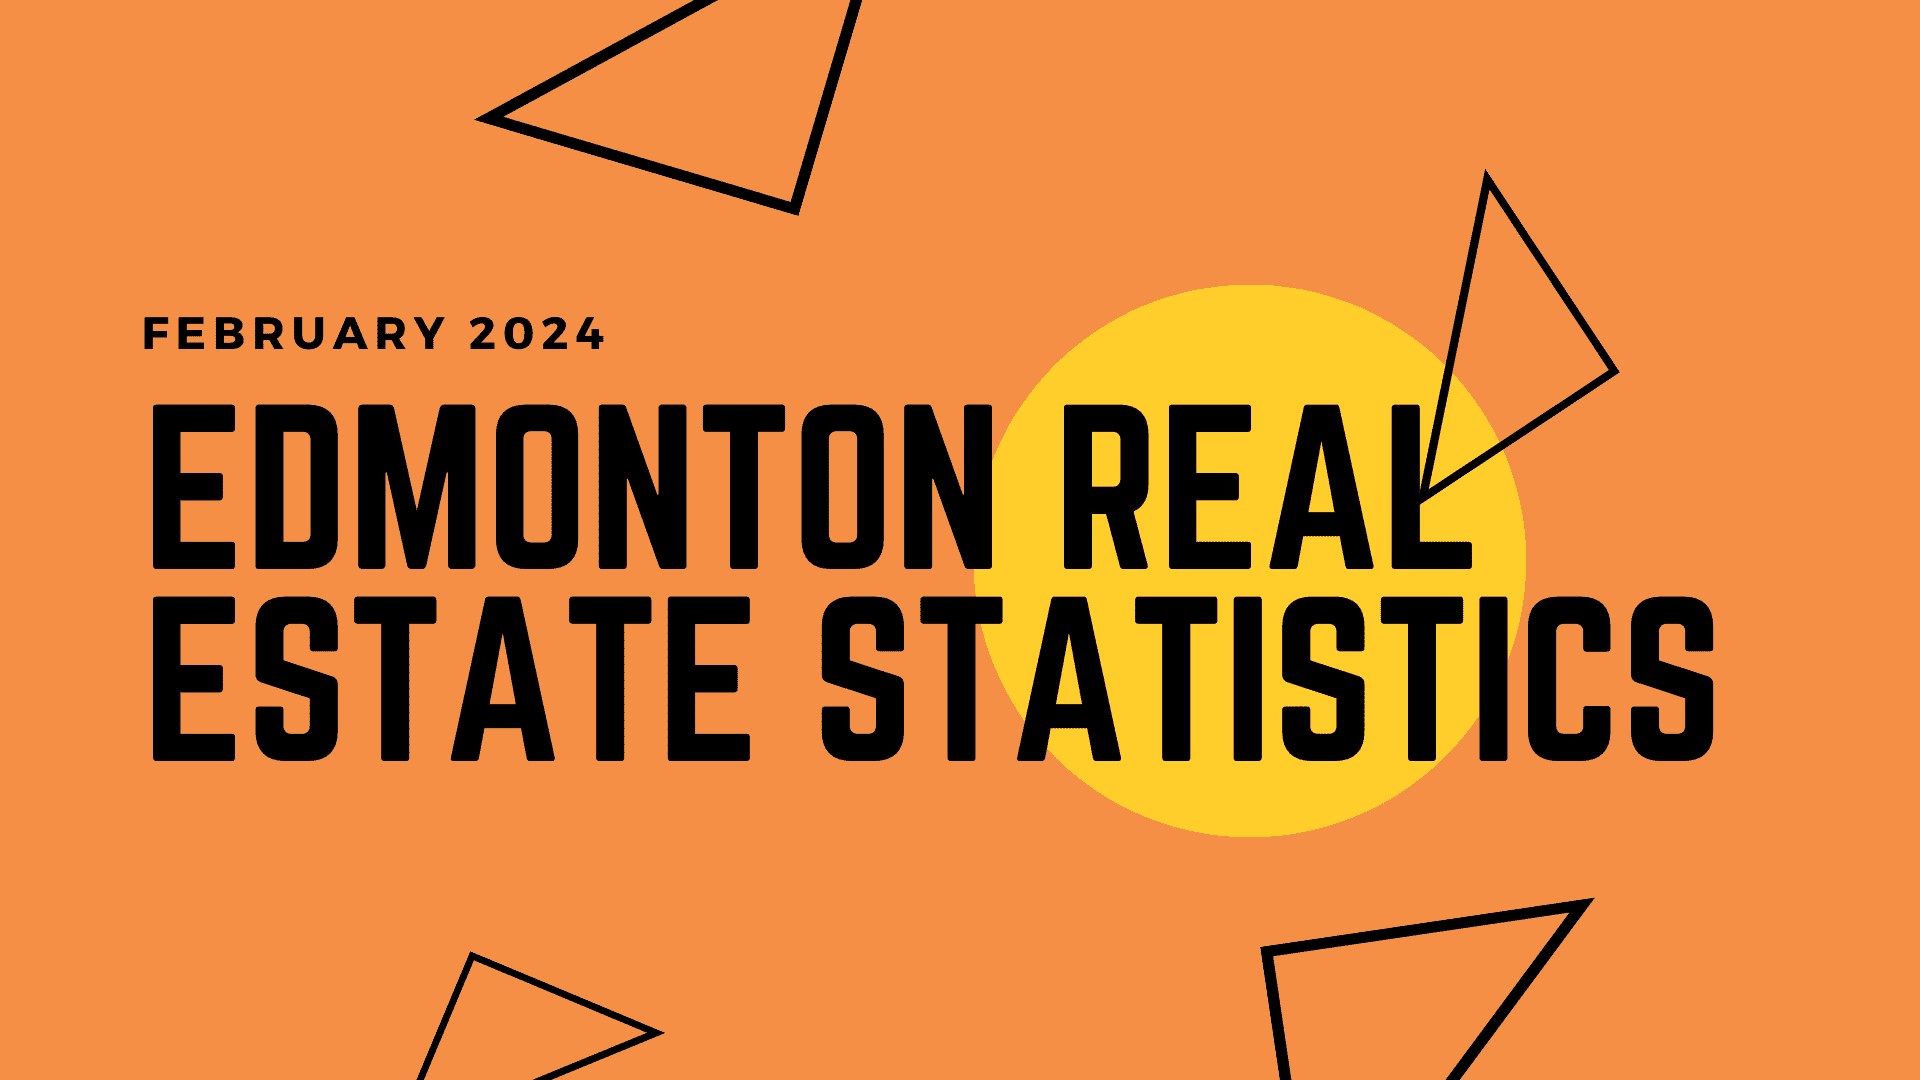 Edmonton Real Estate Statistics for February 2024